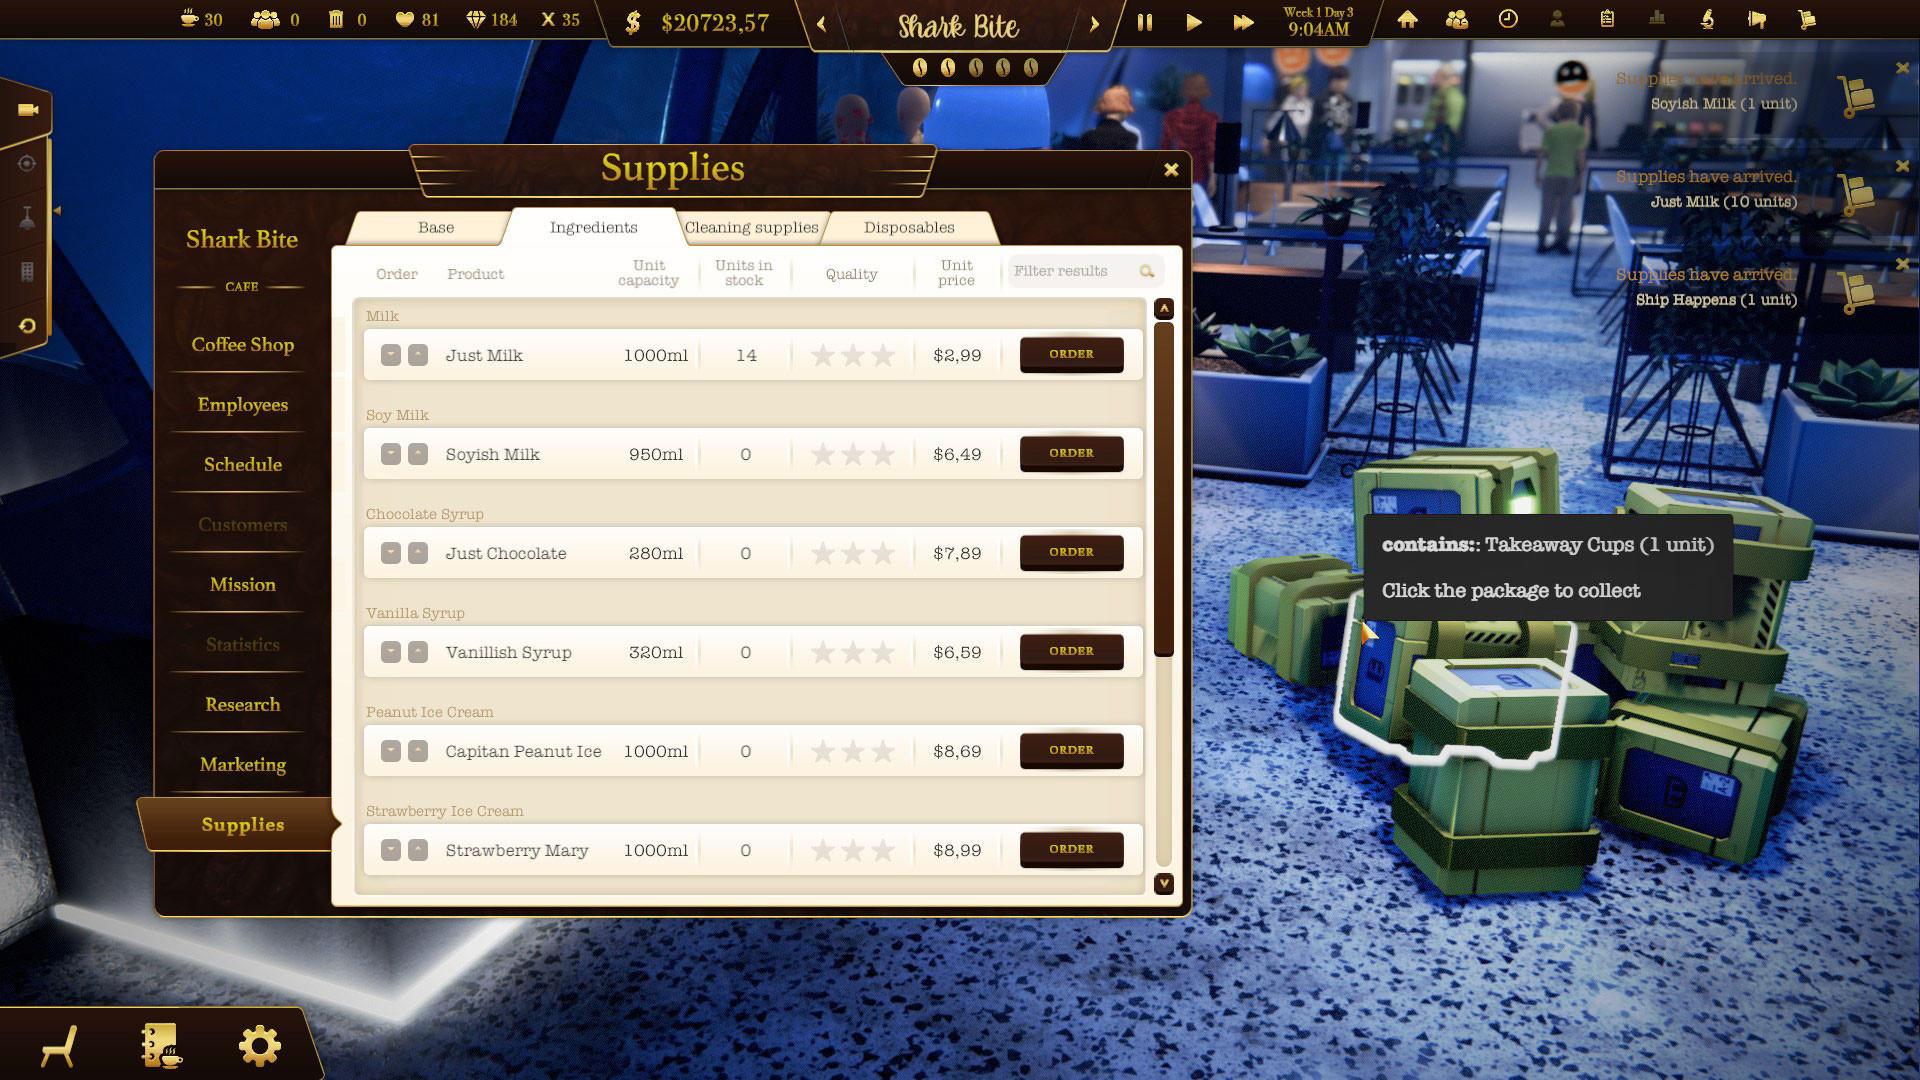 Espresso Tycoon Prologue: Underwater screenshot game